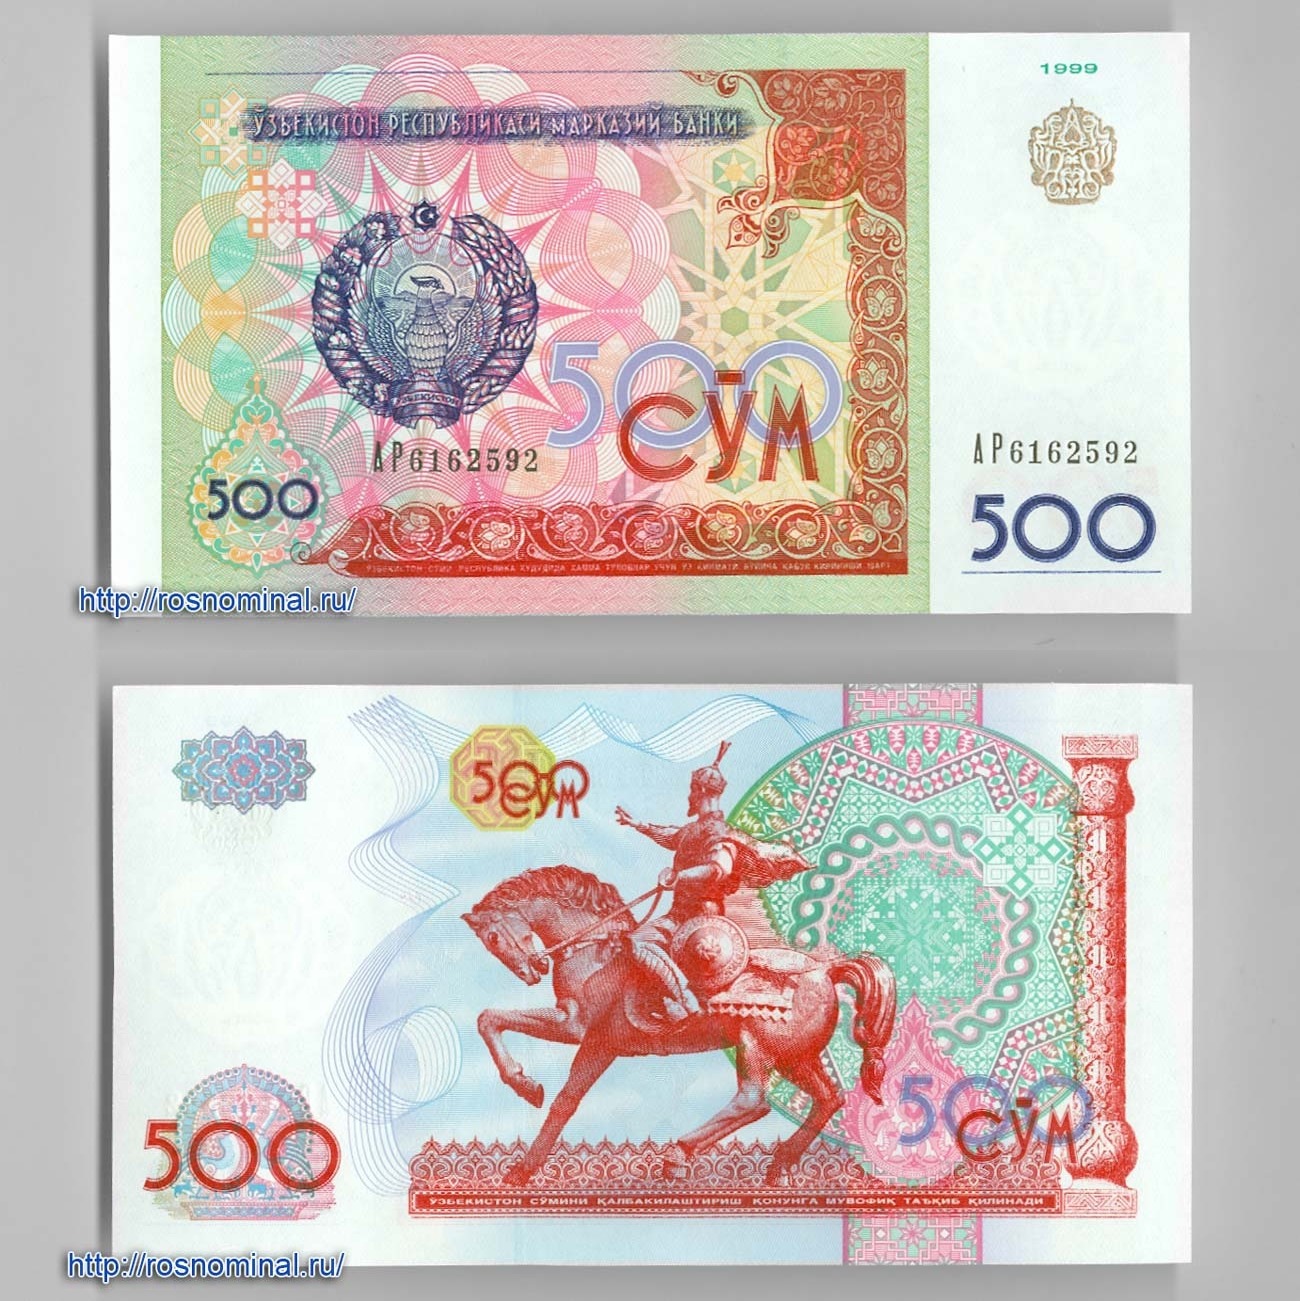 Сум купюра. 500 Сум Узбекистан купюра. Узбекский сум банкноты500 Сумав 1994. 500 Сум купюра. Узбекистананская купюра 500 сум.